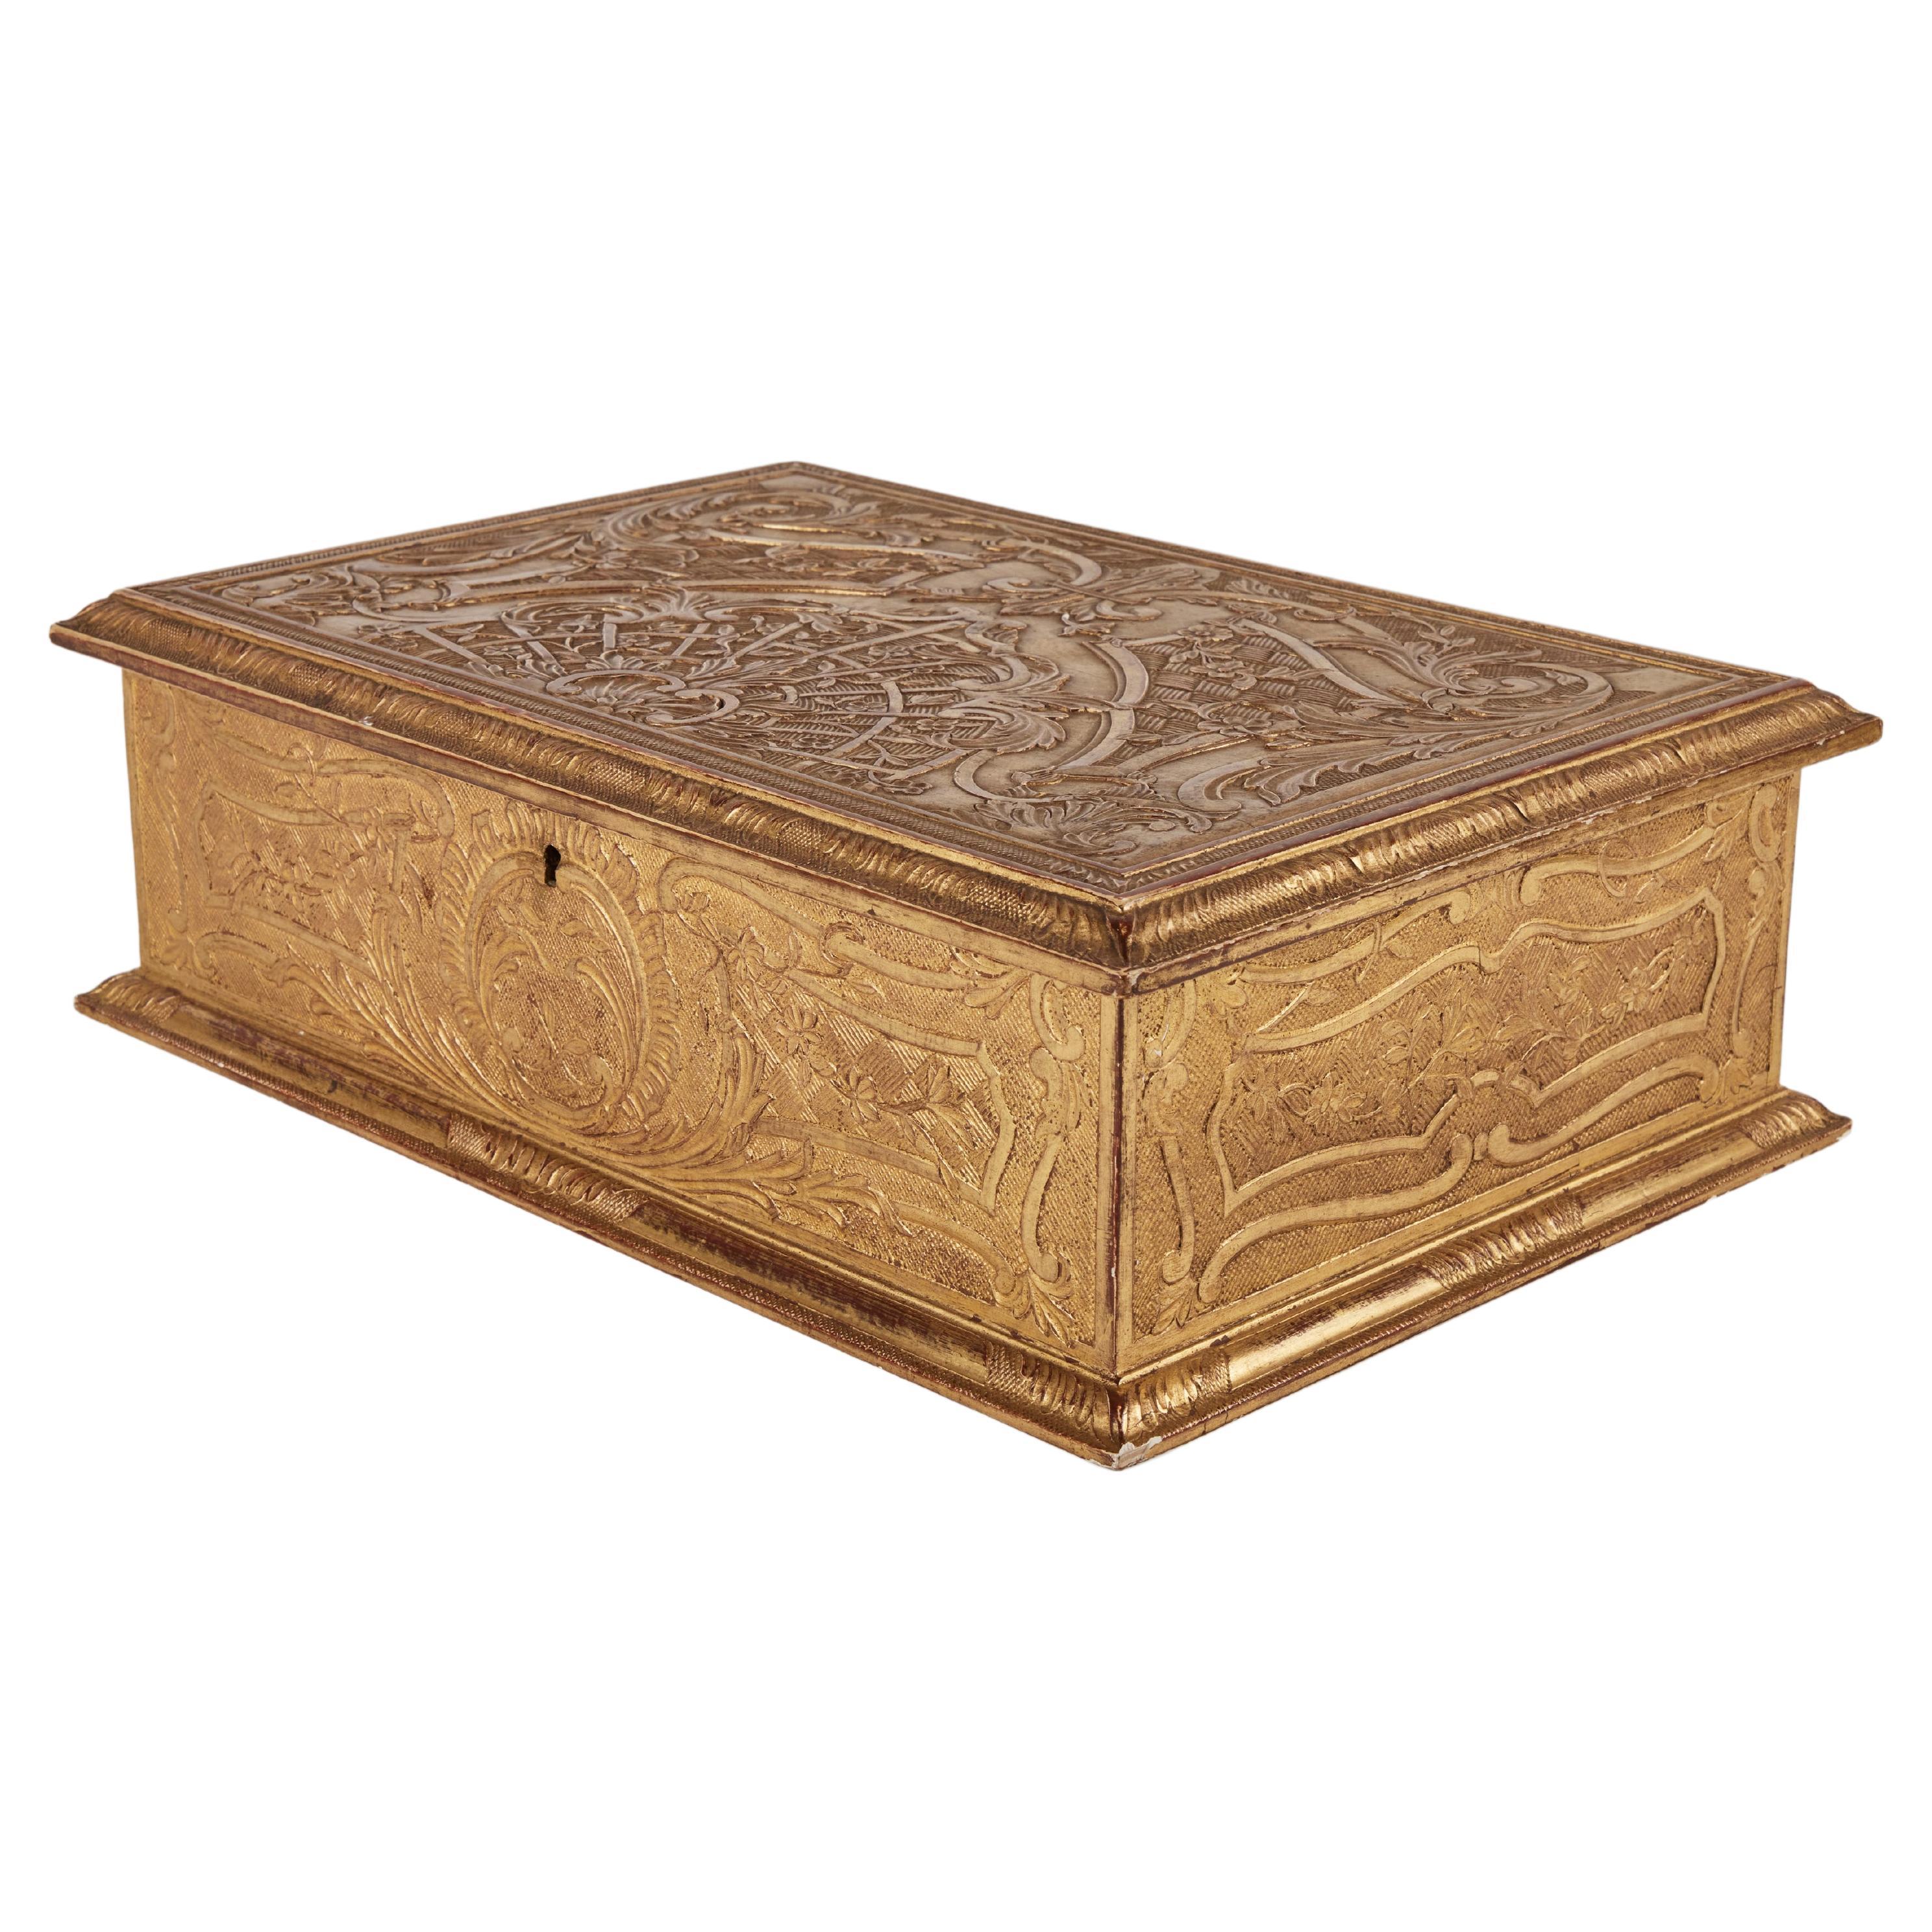 Carved Gilt Wood Box